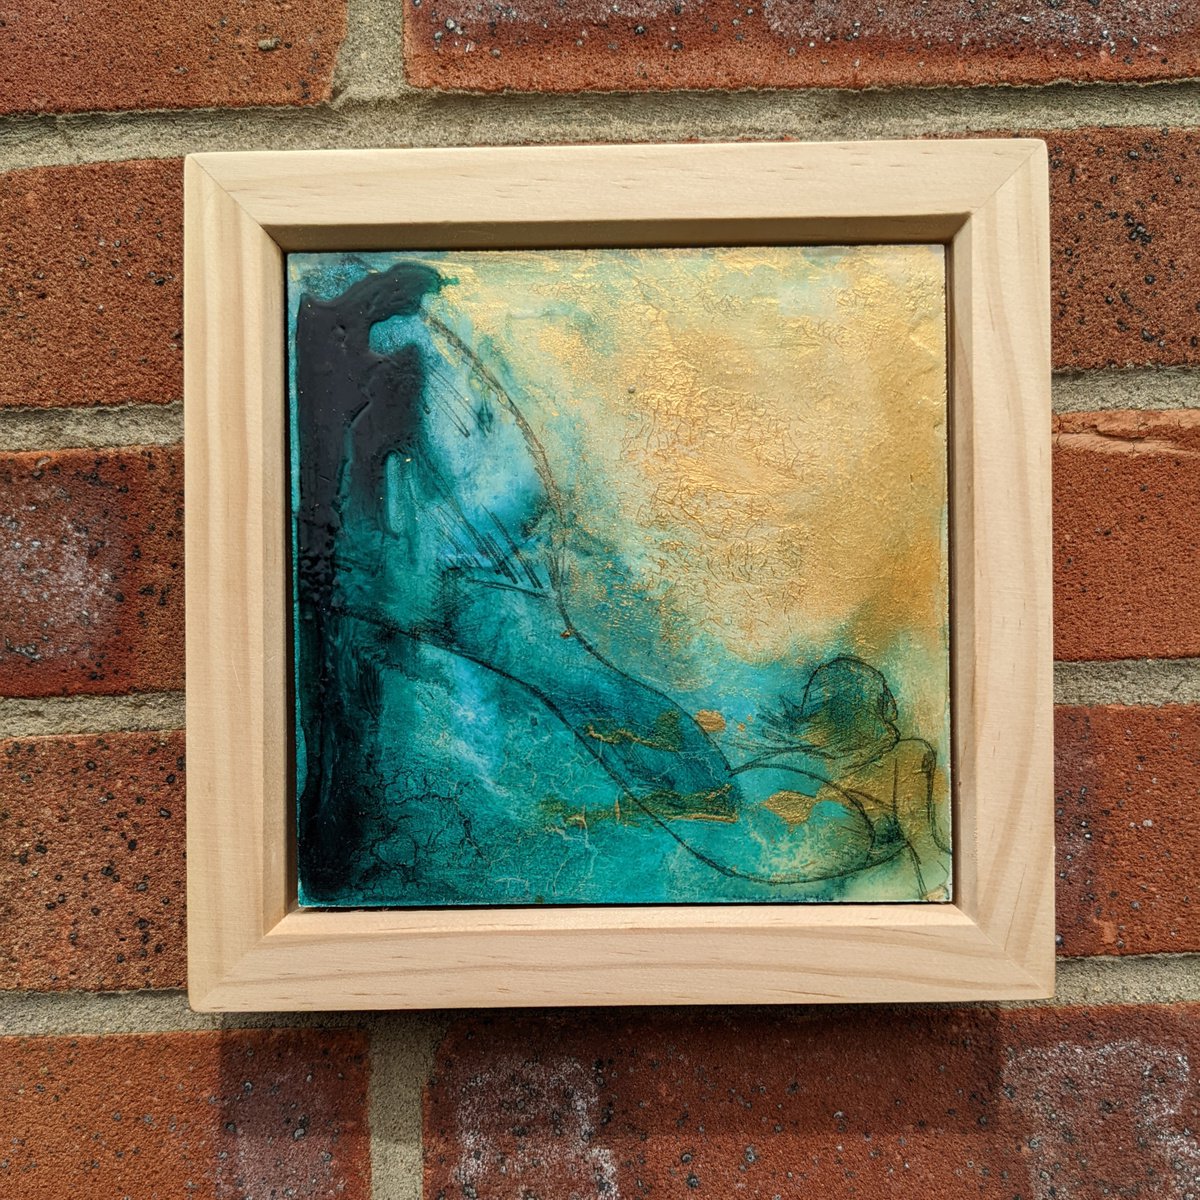 Slipped Away, underwater Mermaid painting by Dianne Bowell